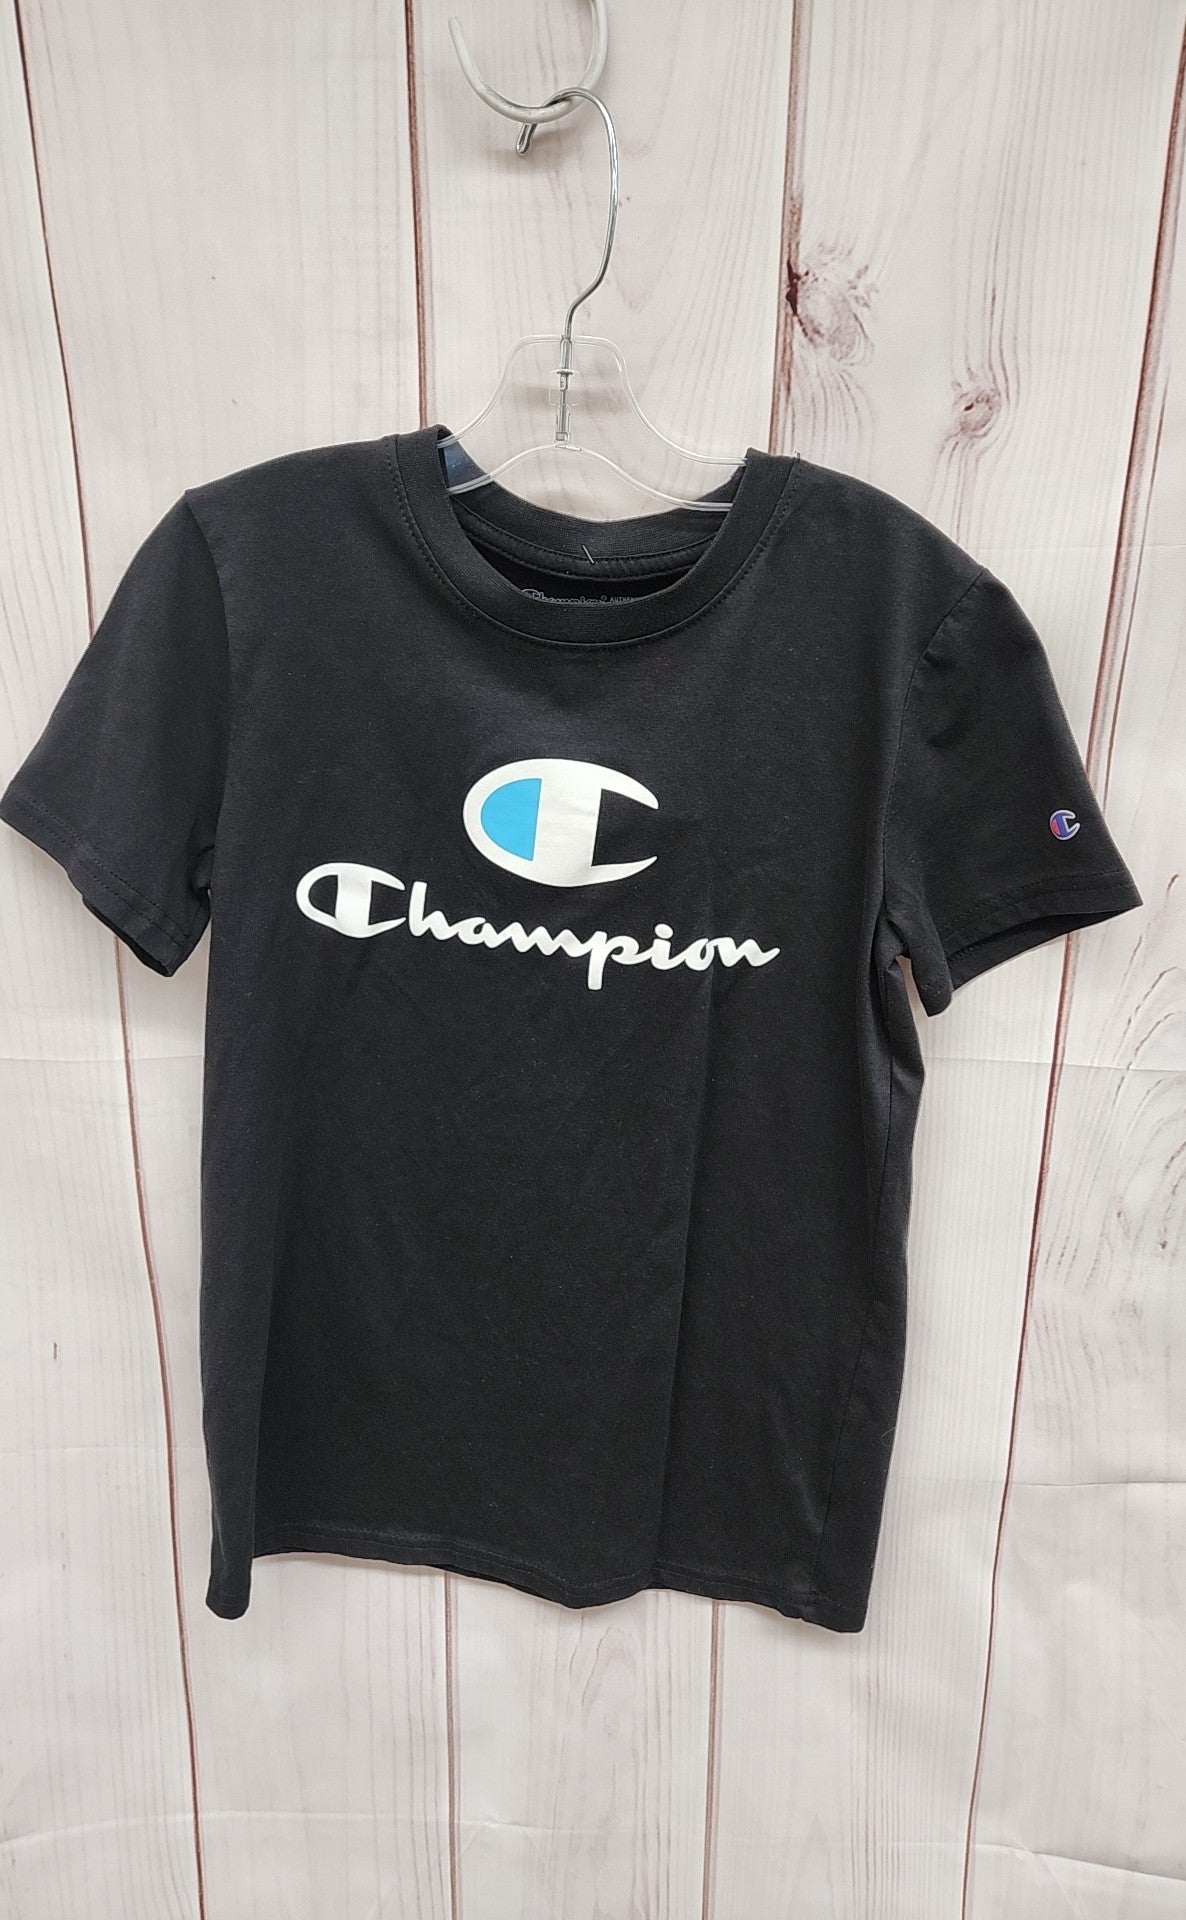 Champion Boy's Size 14/16 Black Shirt